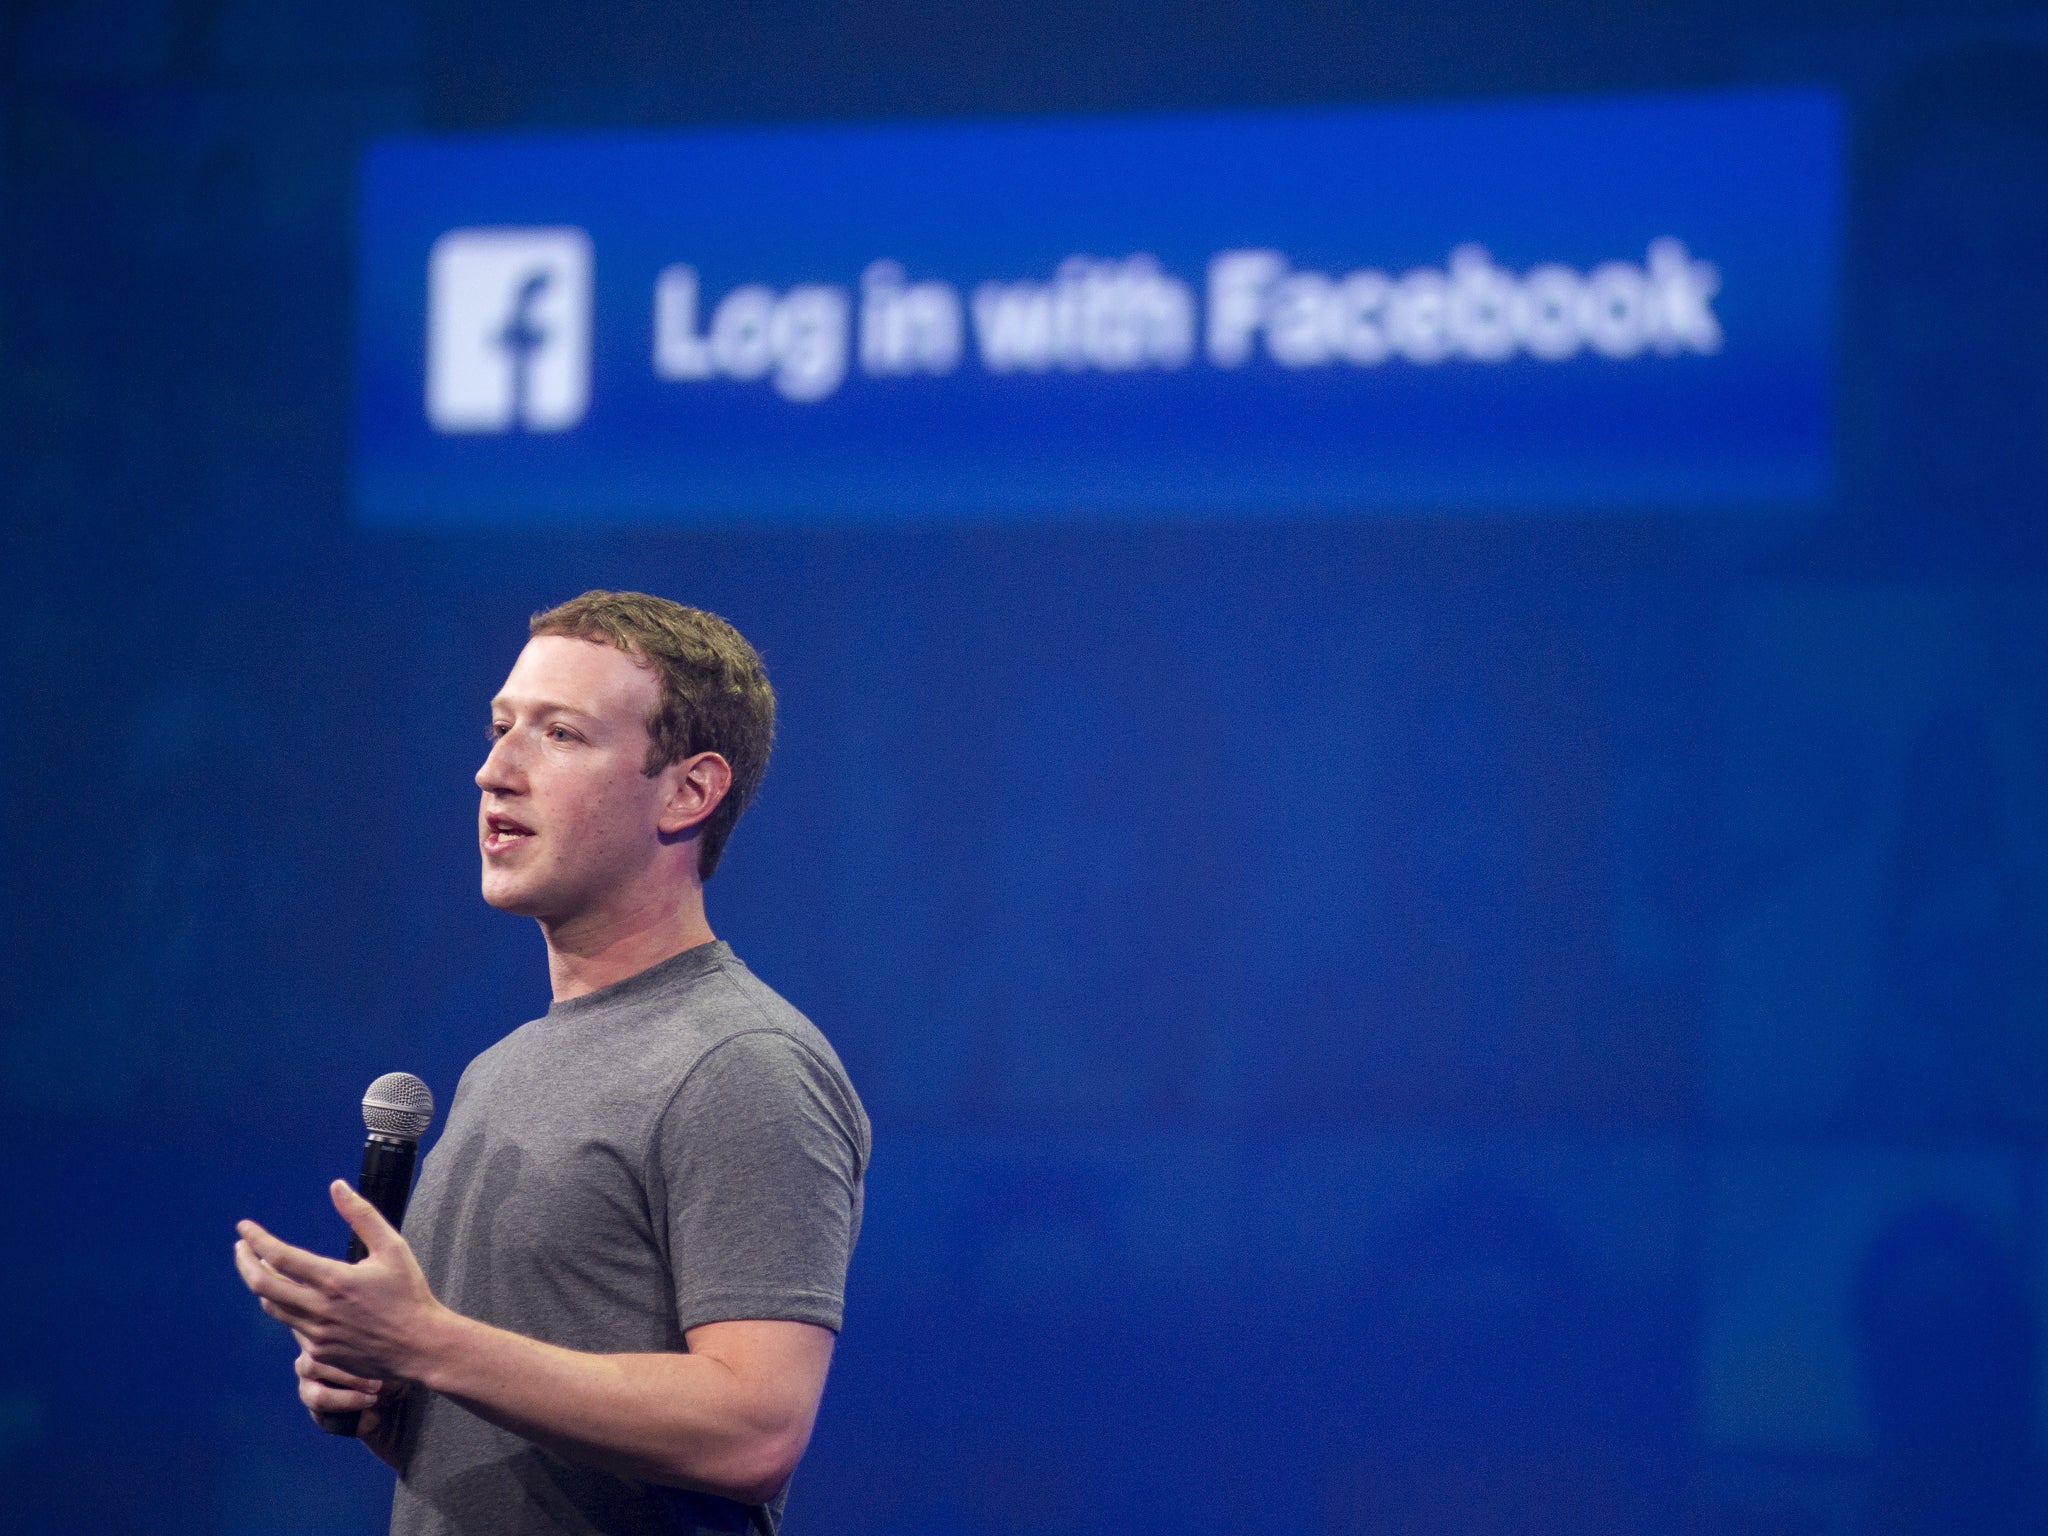 Facebook CEO Mark Zuckerberg speaks at the F8 summit in San Francisco, California, on March 25, 2015